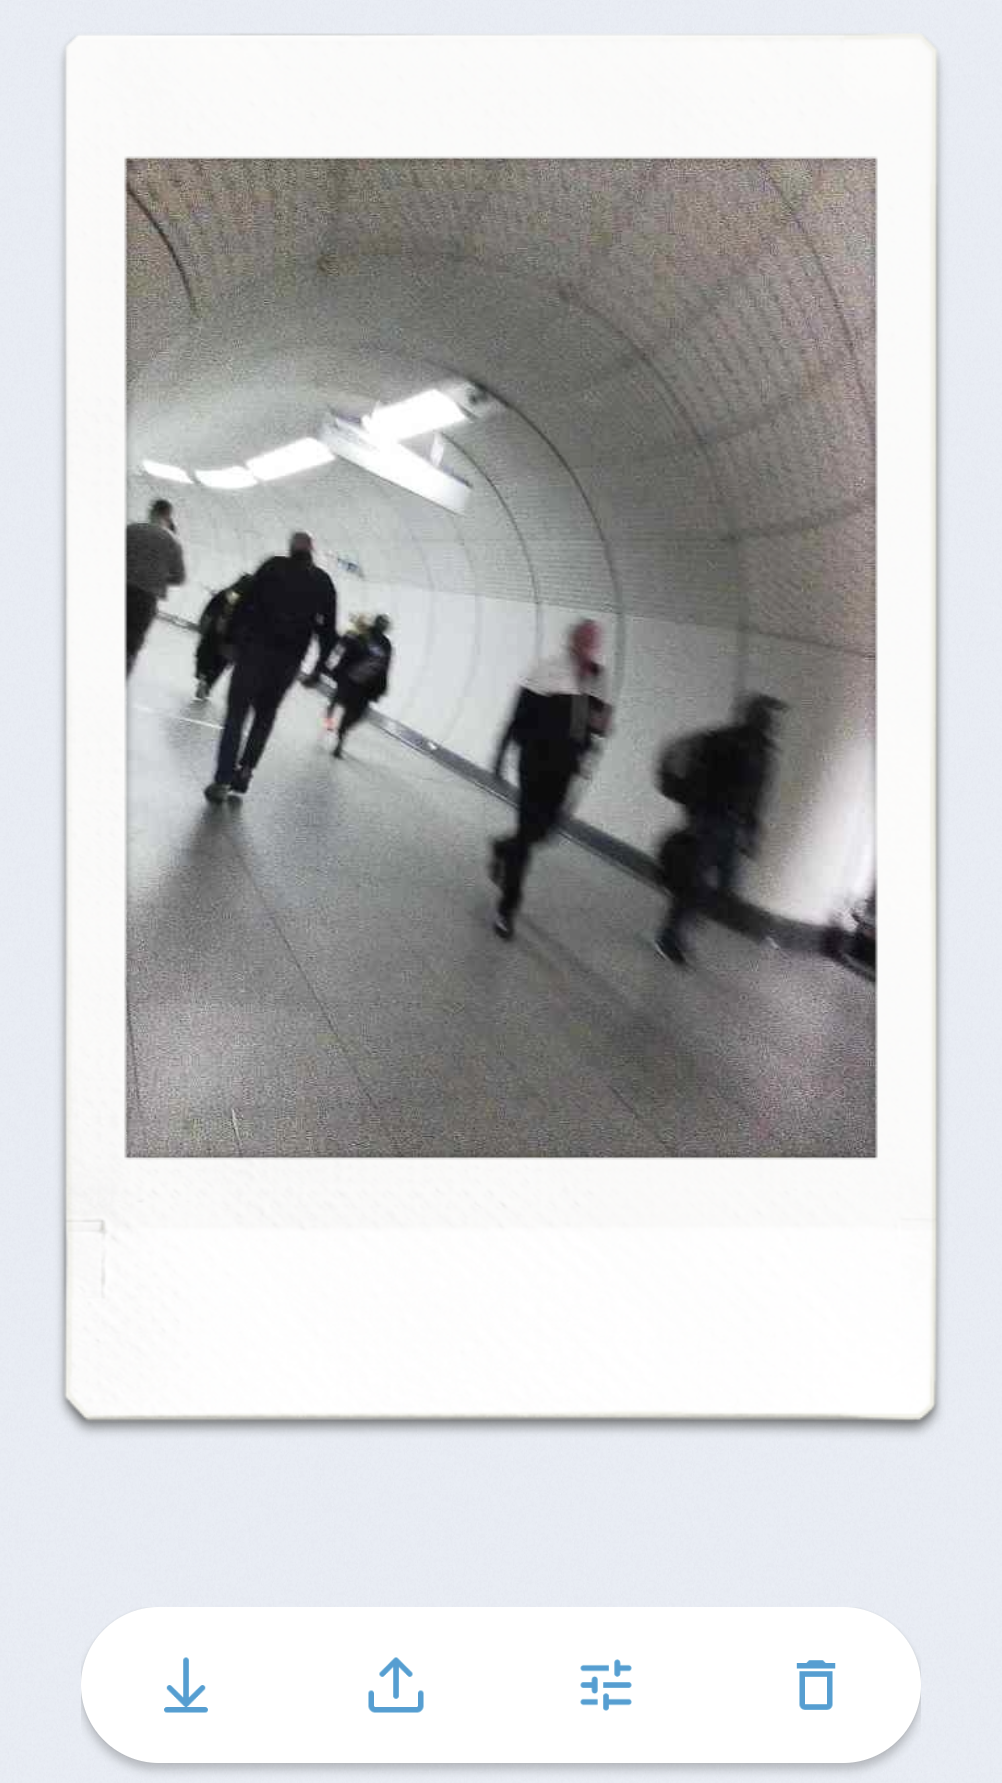 Fujifilm Instax Pall app screenshot of London street photo